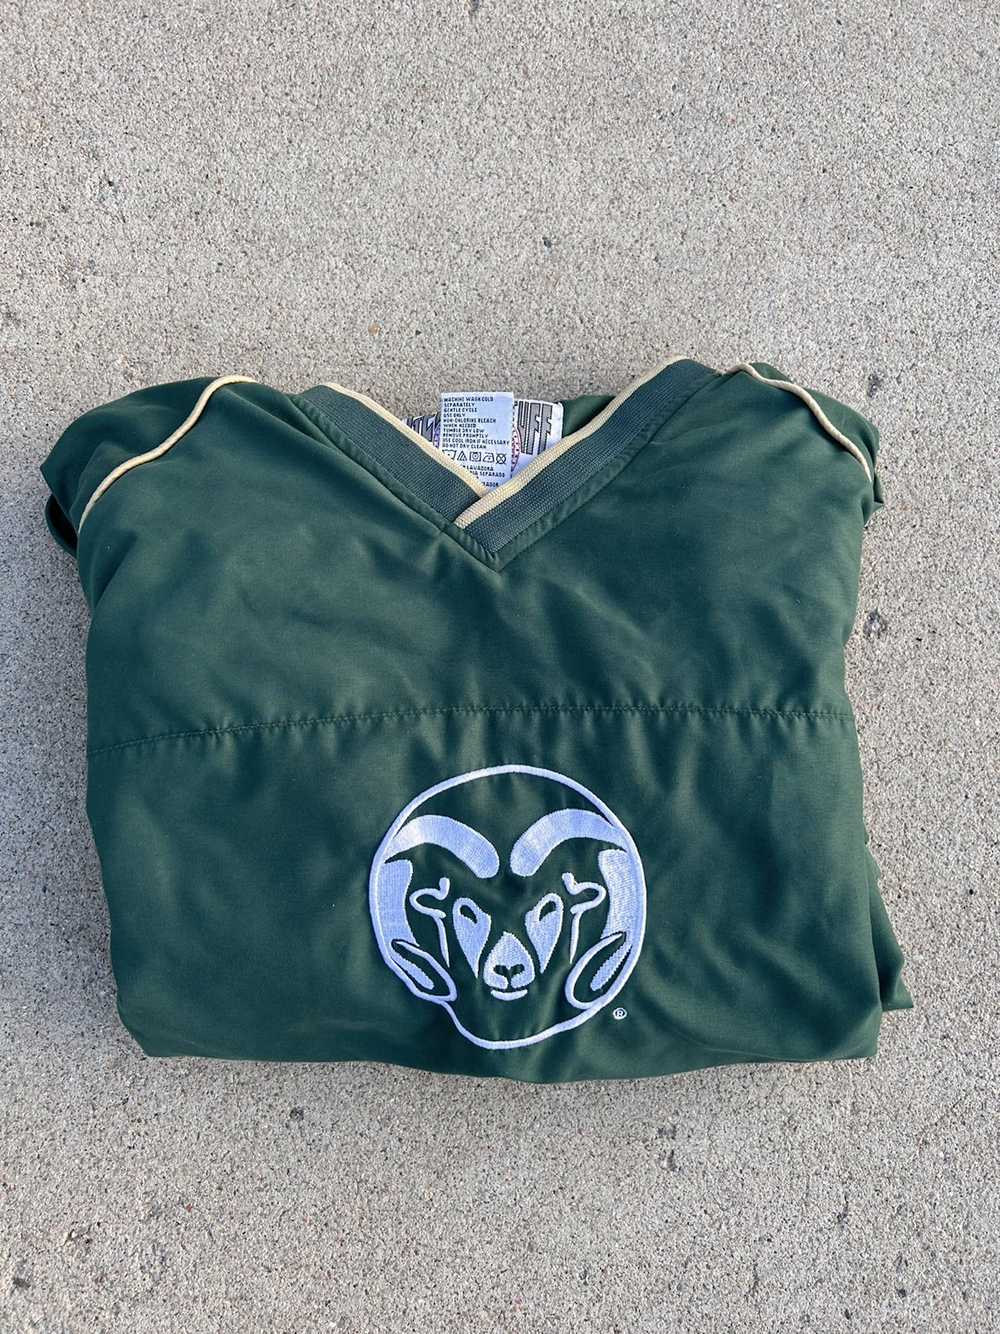 Collegiate Colorado State University Rams Jumper - image 3